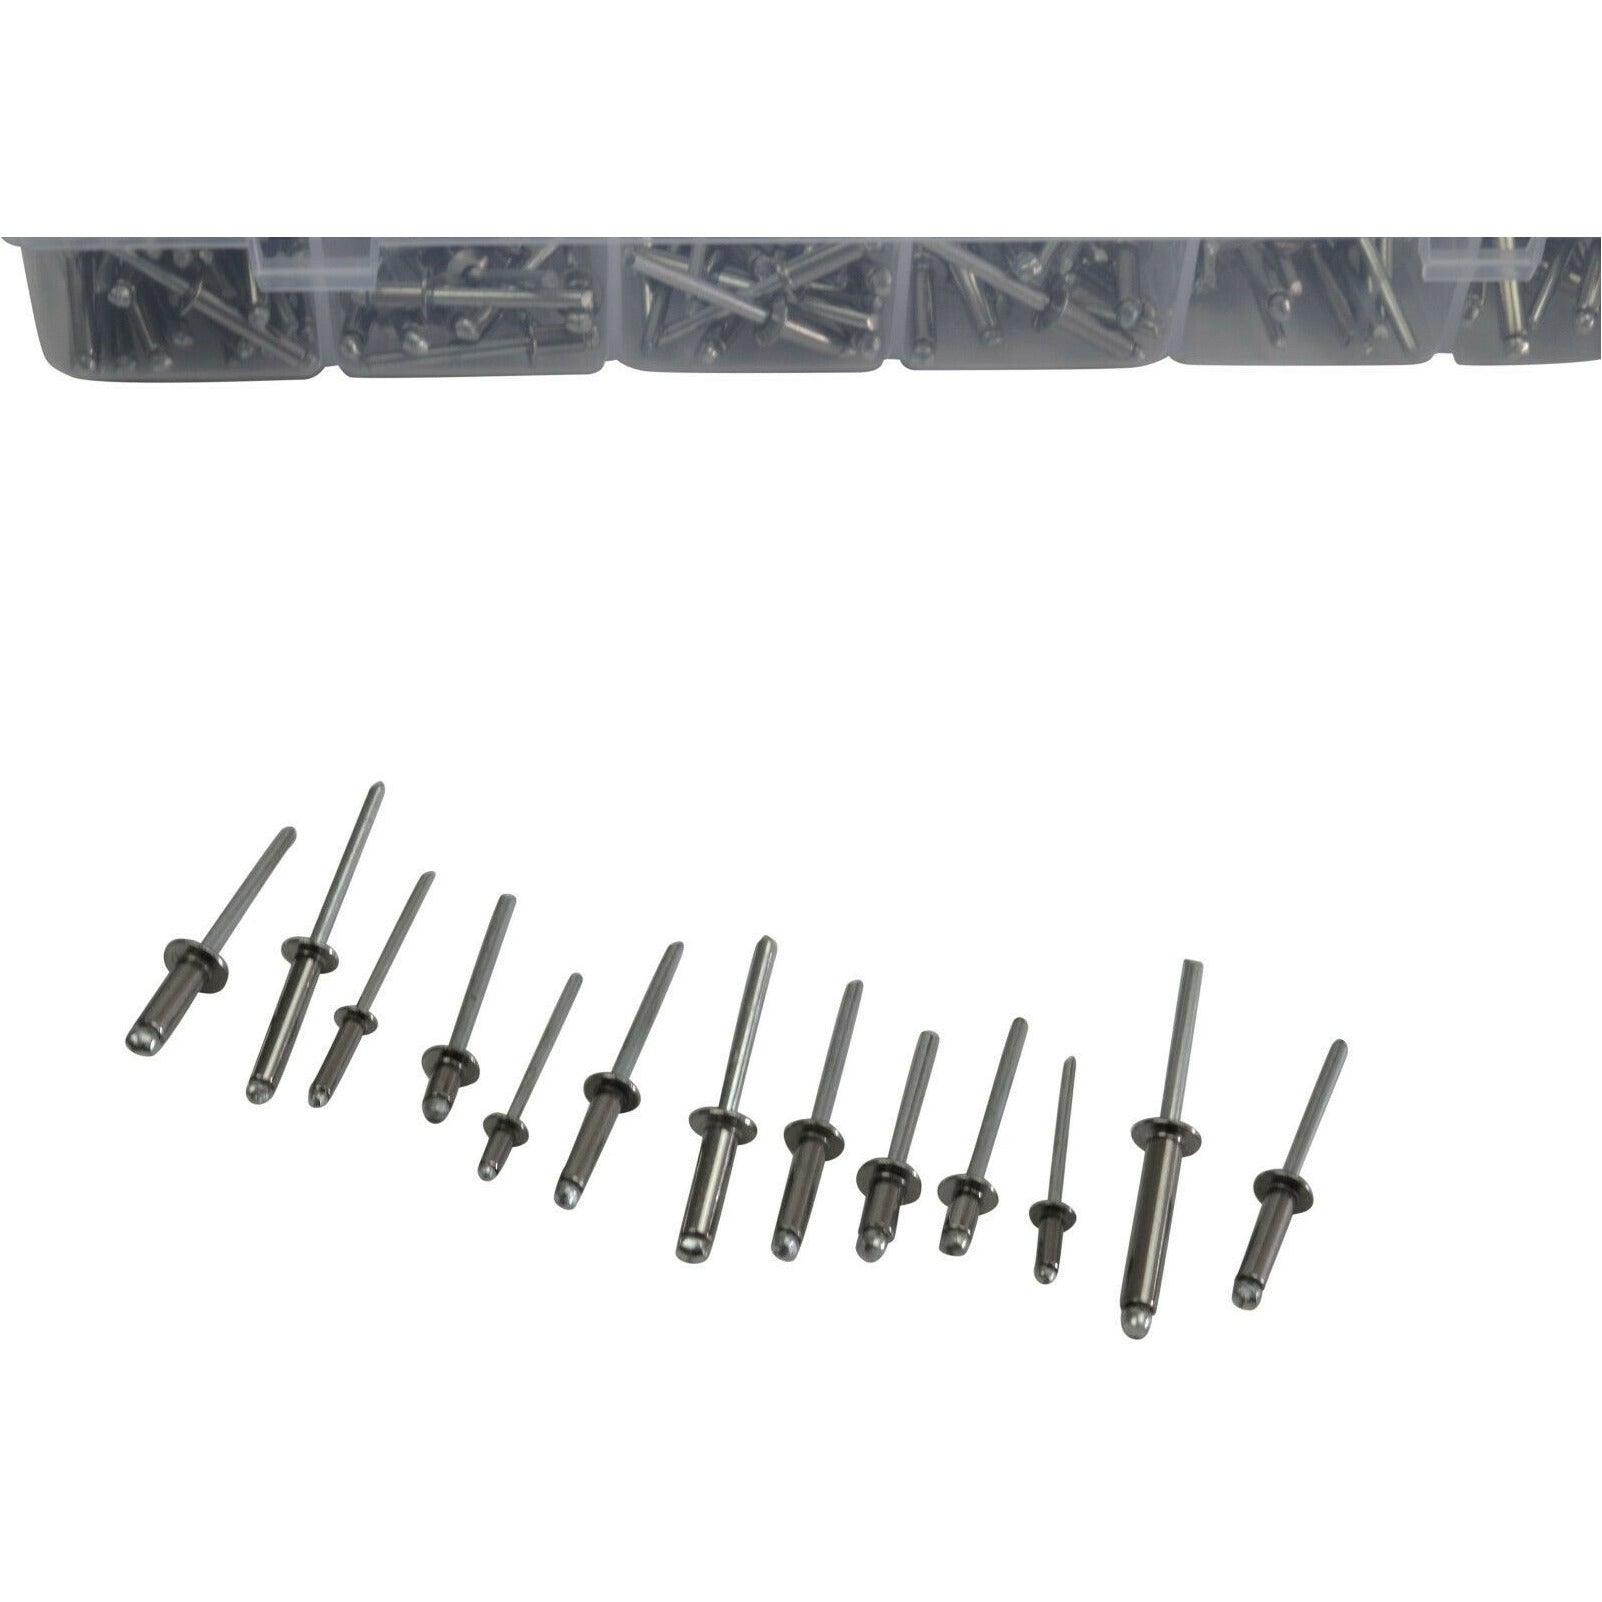 510 pc 304 Stainless Steel Pop Rivet Assortment Kit 6 mm to 25 mm stalk size